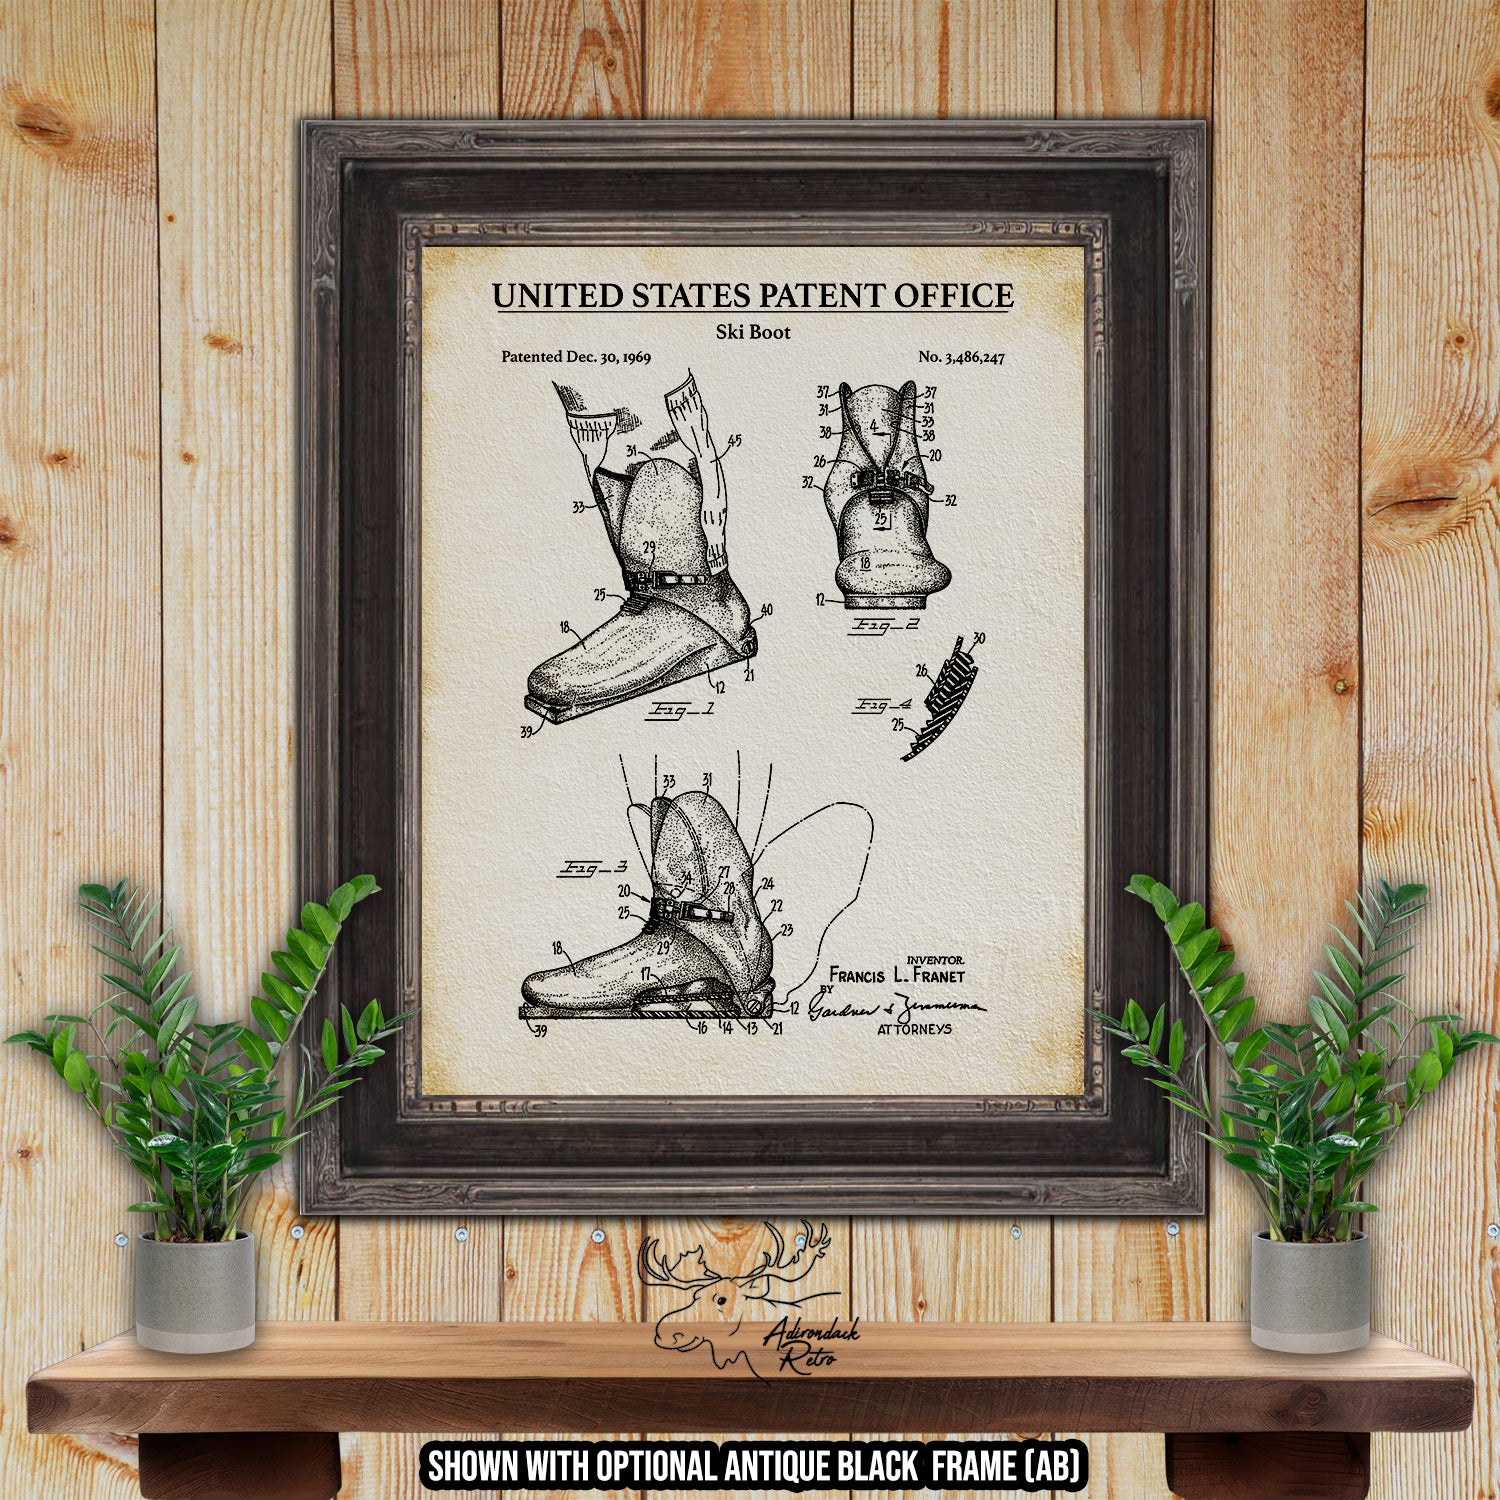 Ski Boot 1969 Patent Print at Adirondack Retro